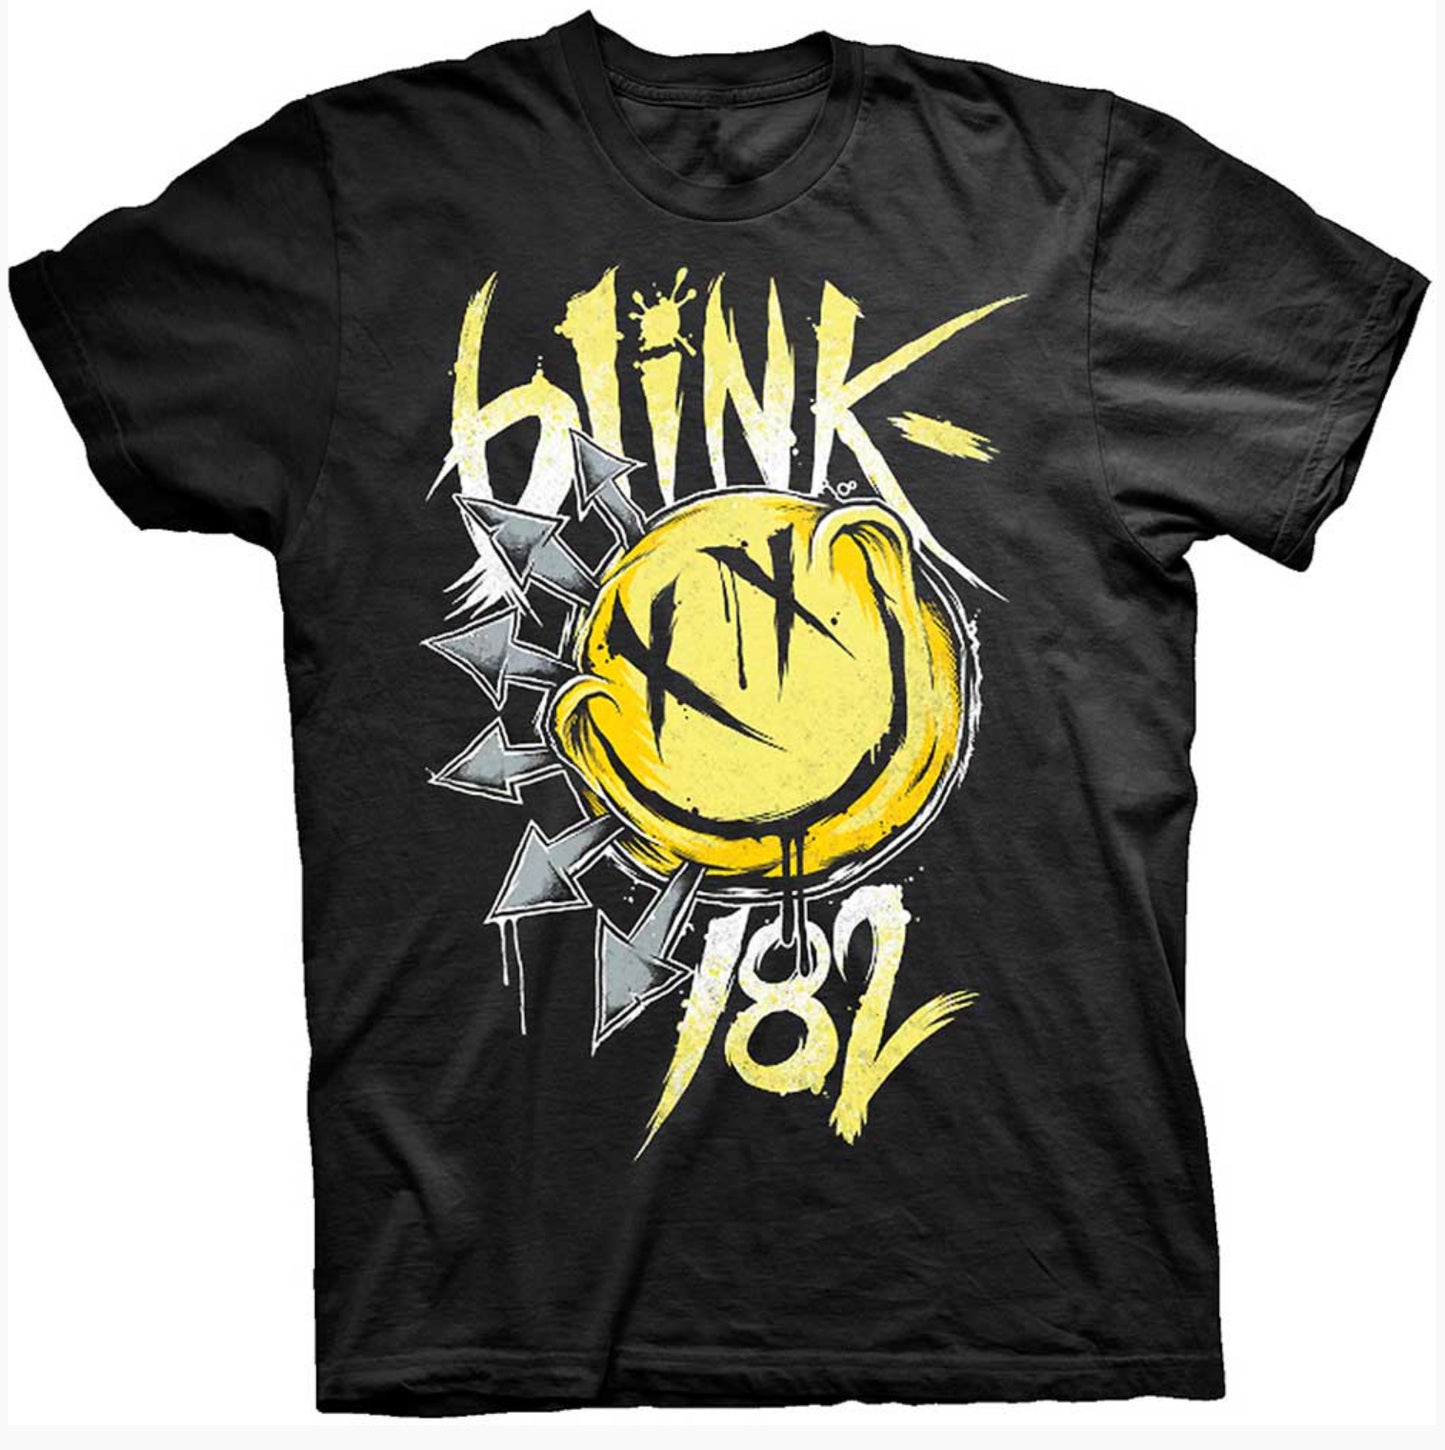 Blink 182 T-shirts